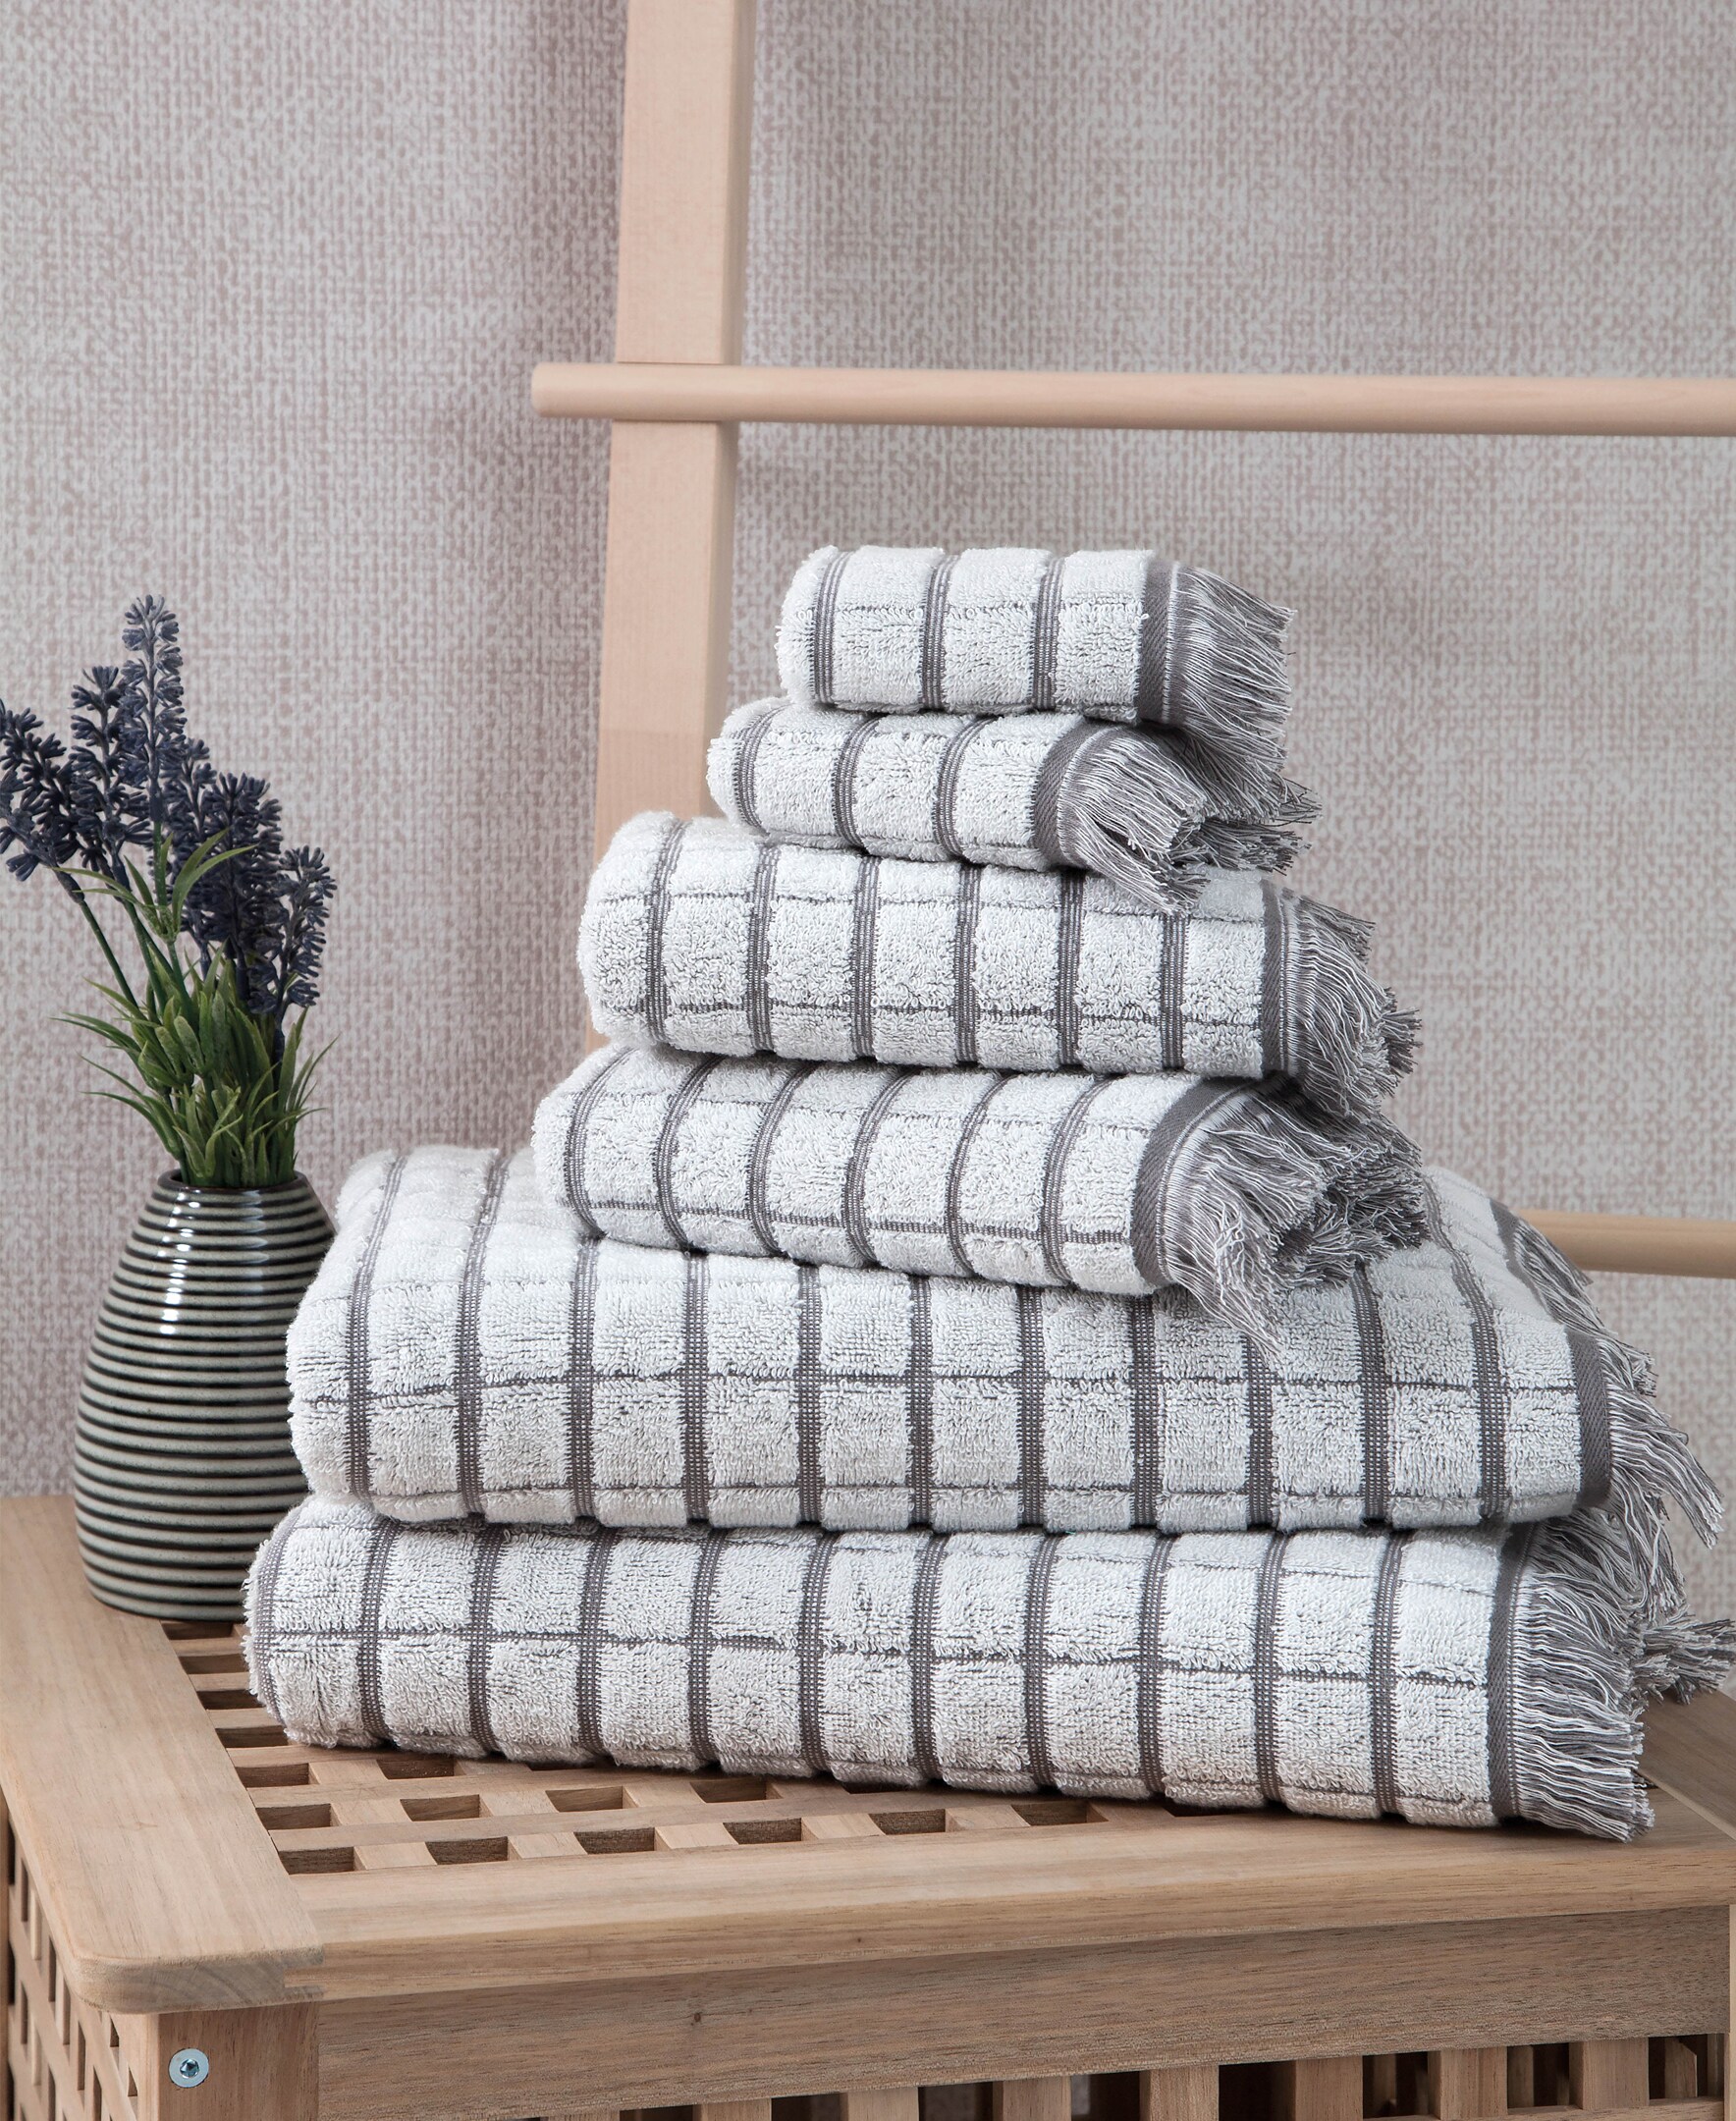 Turkish Cotton Premium Bath Towel